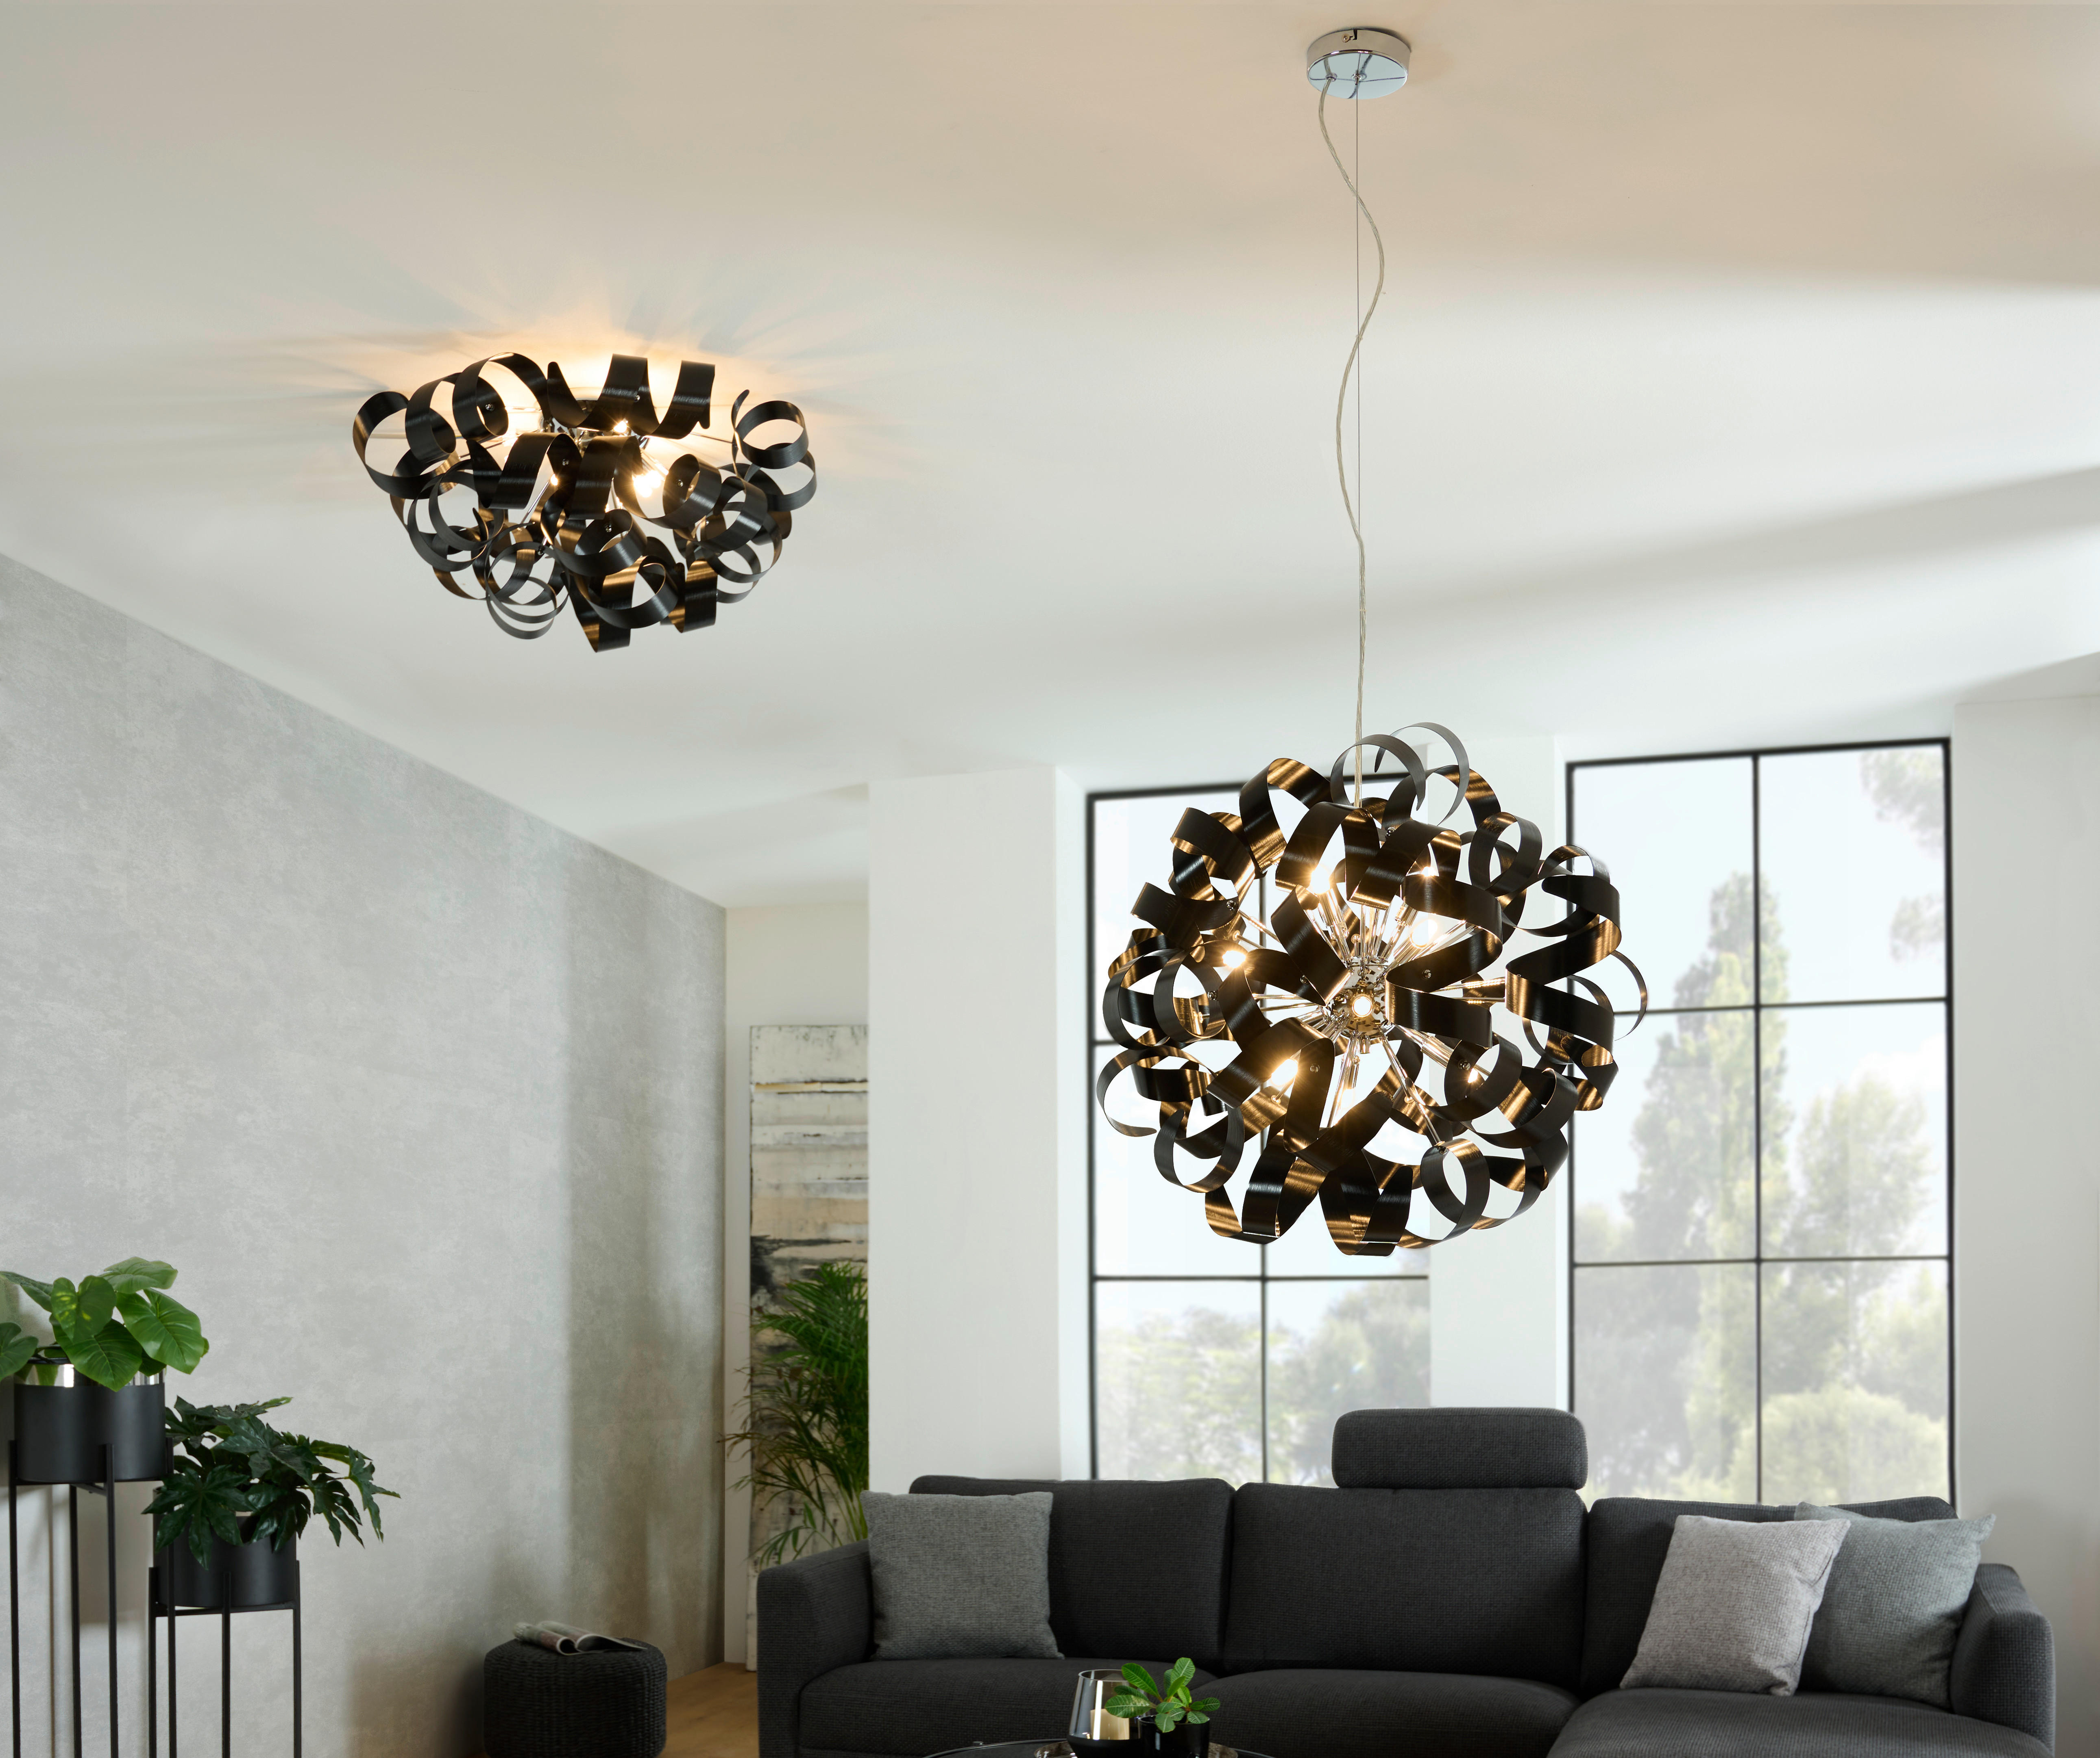 LED-HÄNGLAMPA 60/180 cm   - svart, Design, metall (60/180cm) - Ambiente